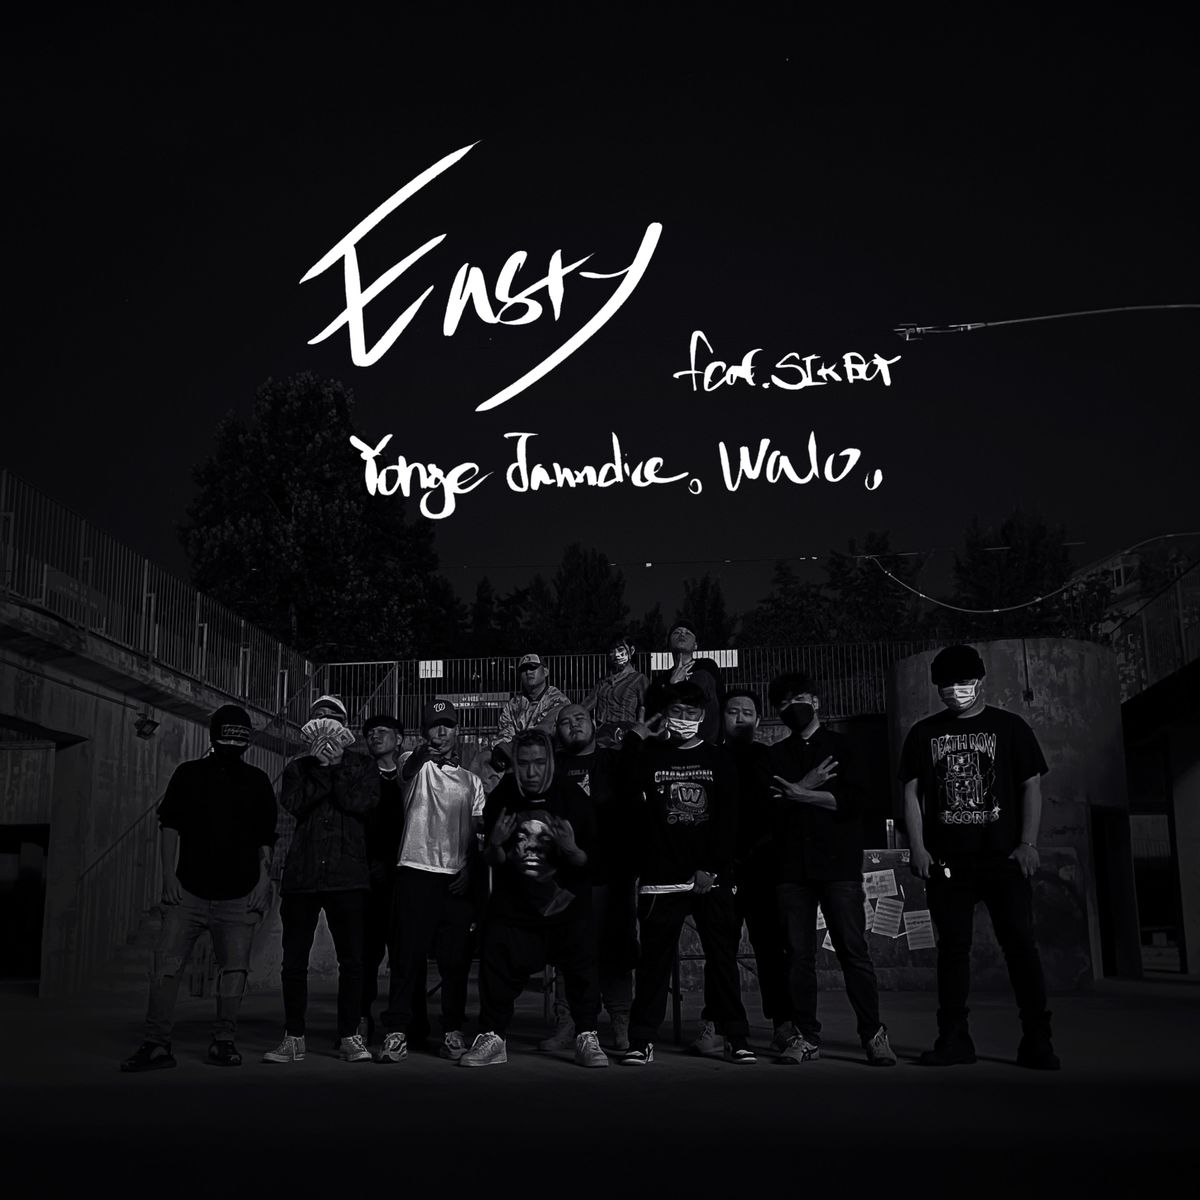 Yonge Jaundice & Walo – Easty (feat. SIKBOY) – Single